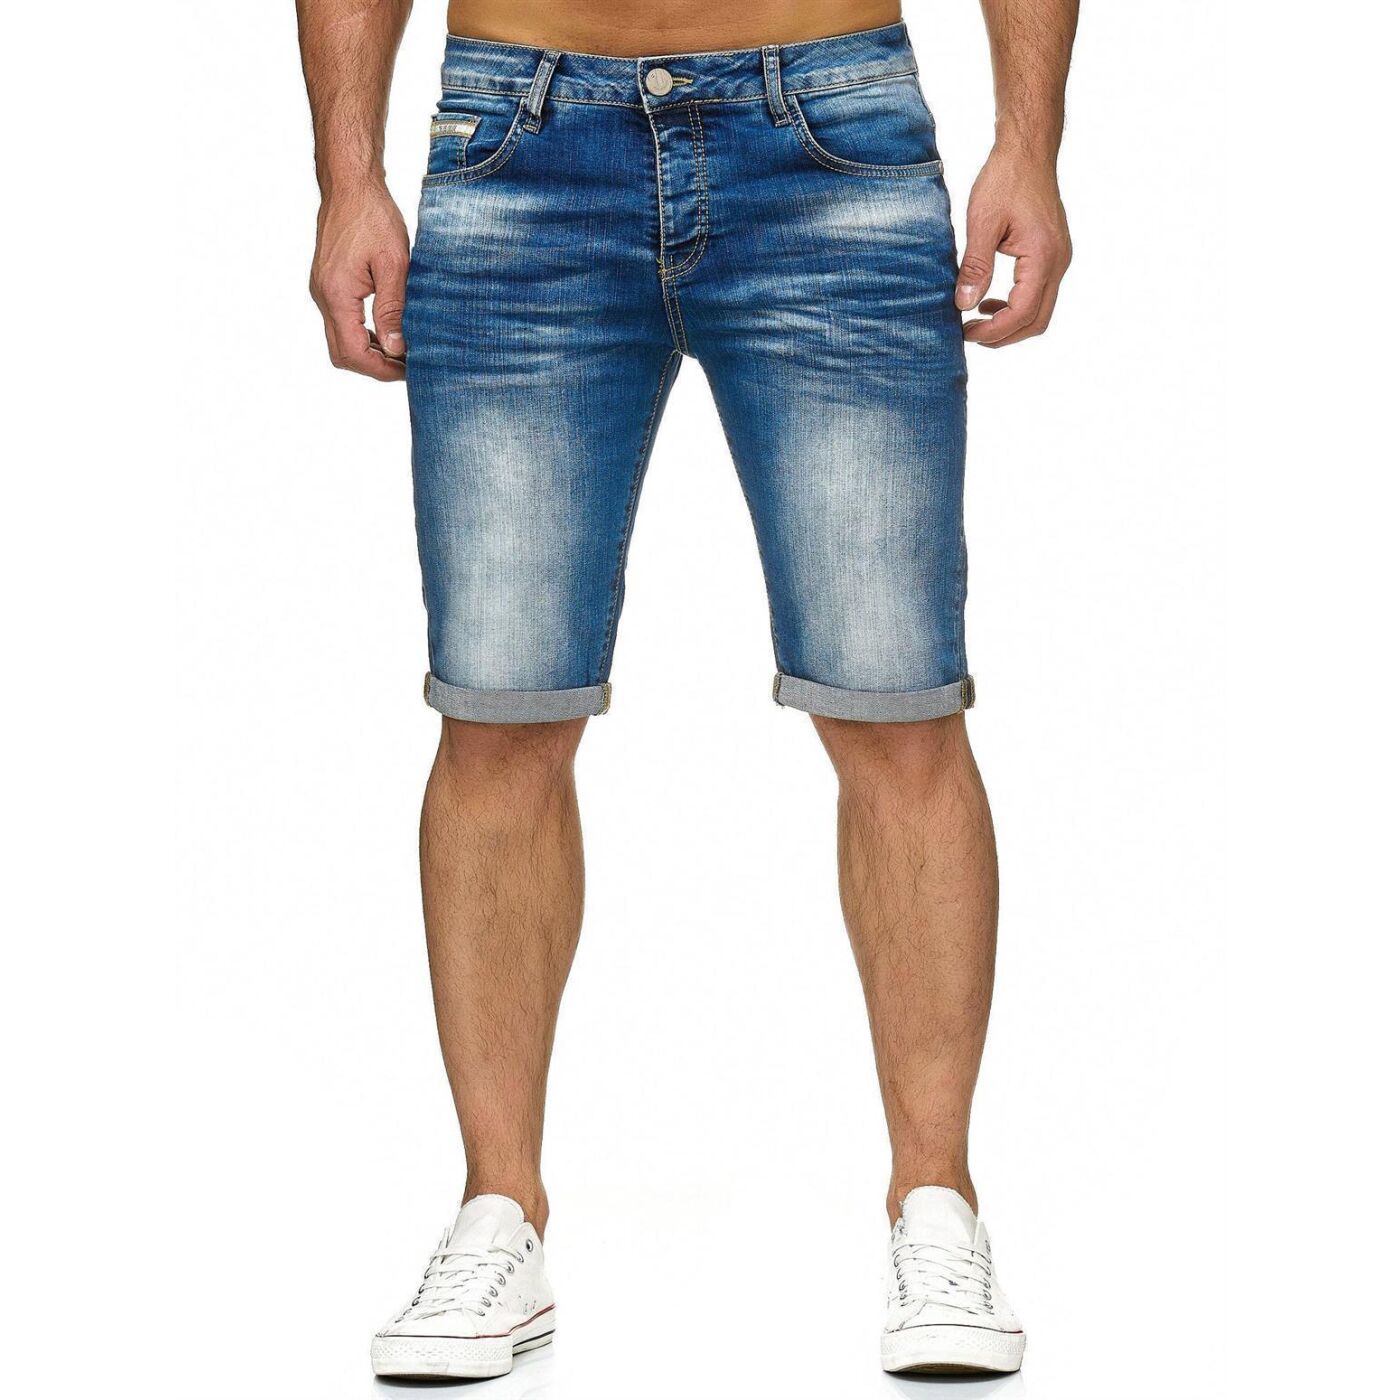 Red Bridge Herren Jeans Short Kurze Hose Denim Basic Blau M4845 - Red, €  34,90 | Shorts